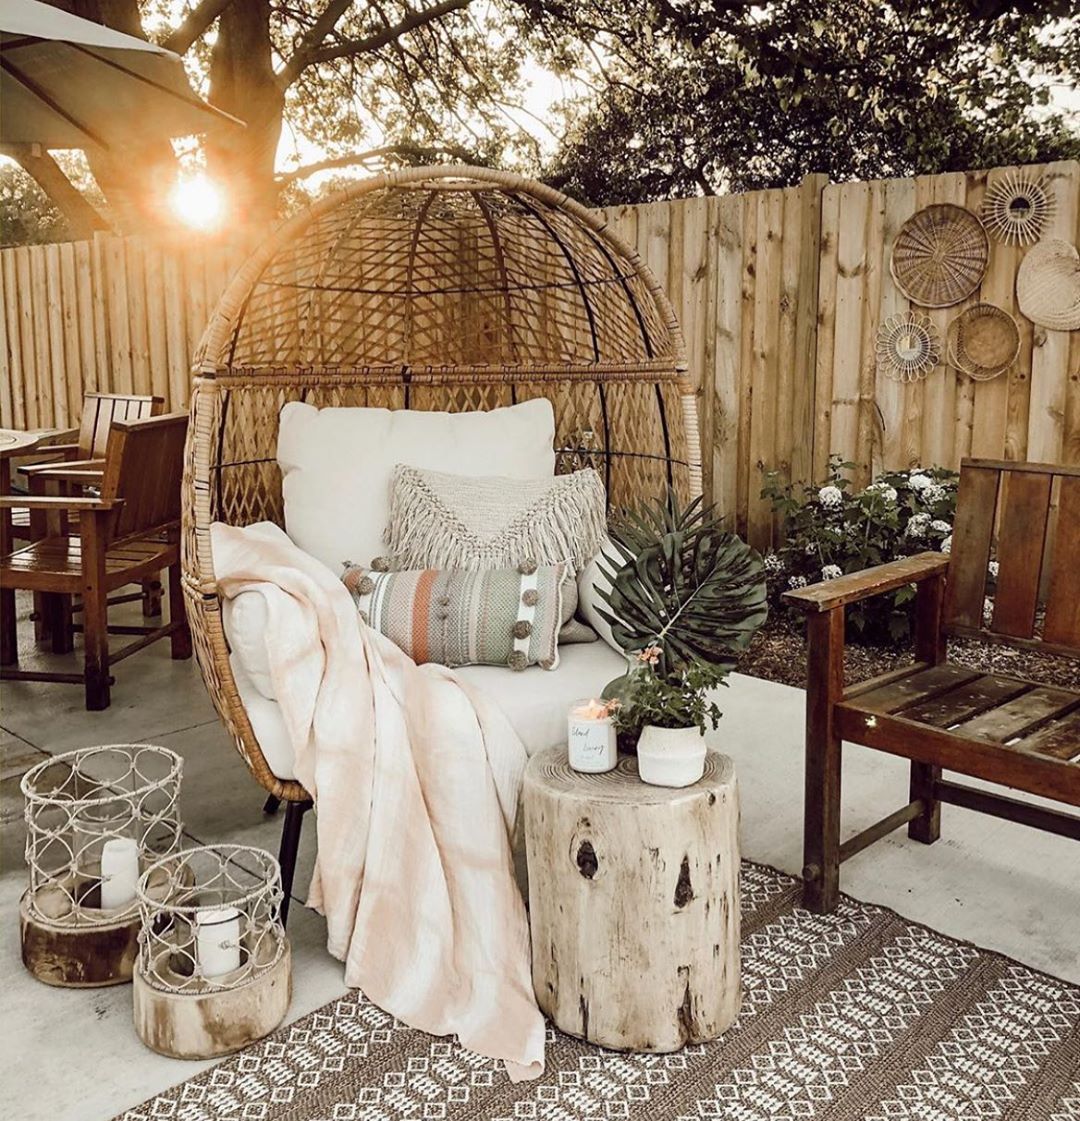 50+ Beautiful Backyard Patio Design Ideas To Enjoy The Great Outdoors